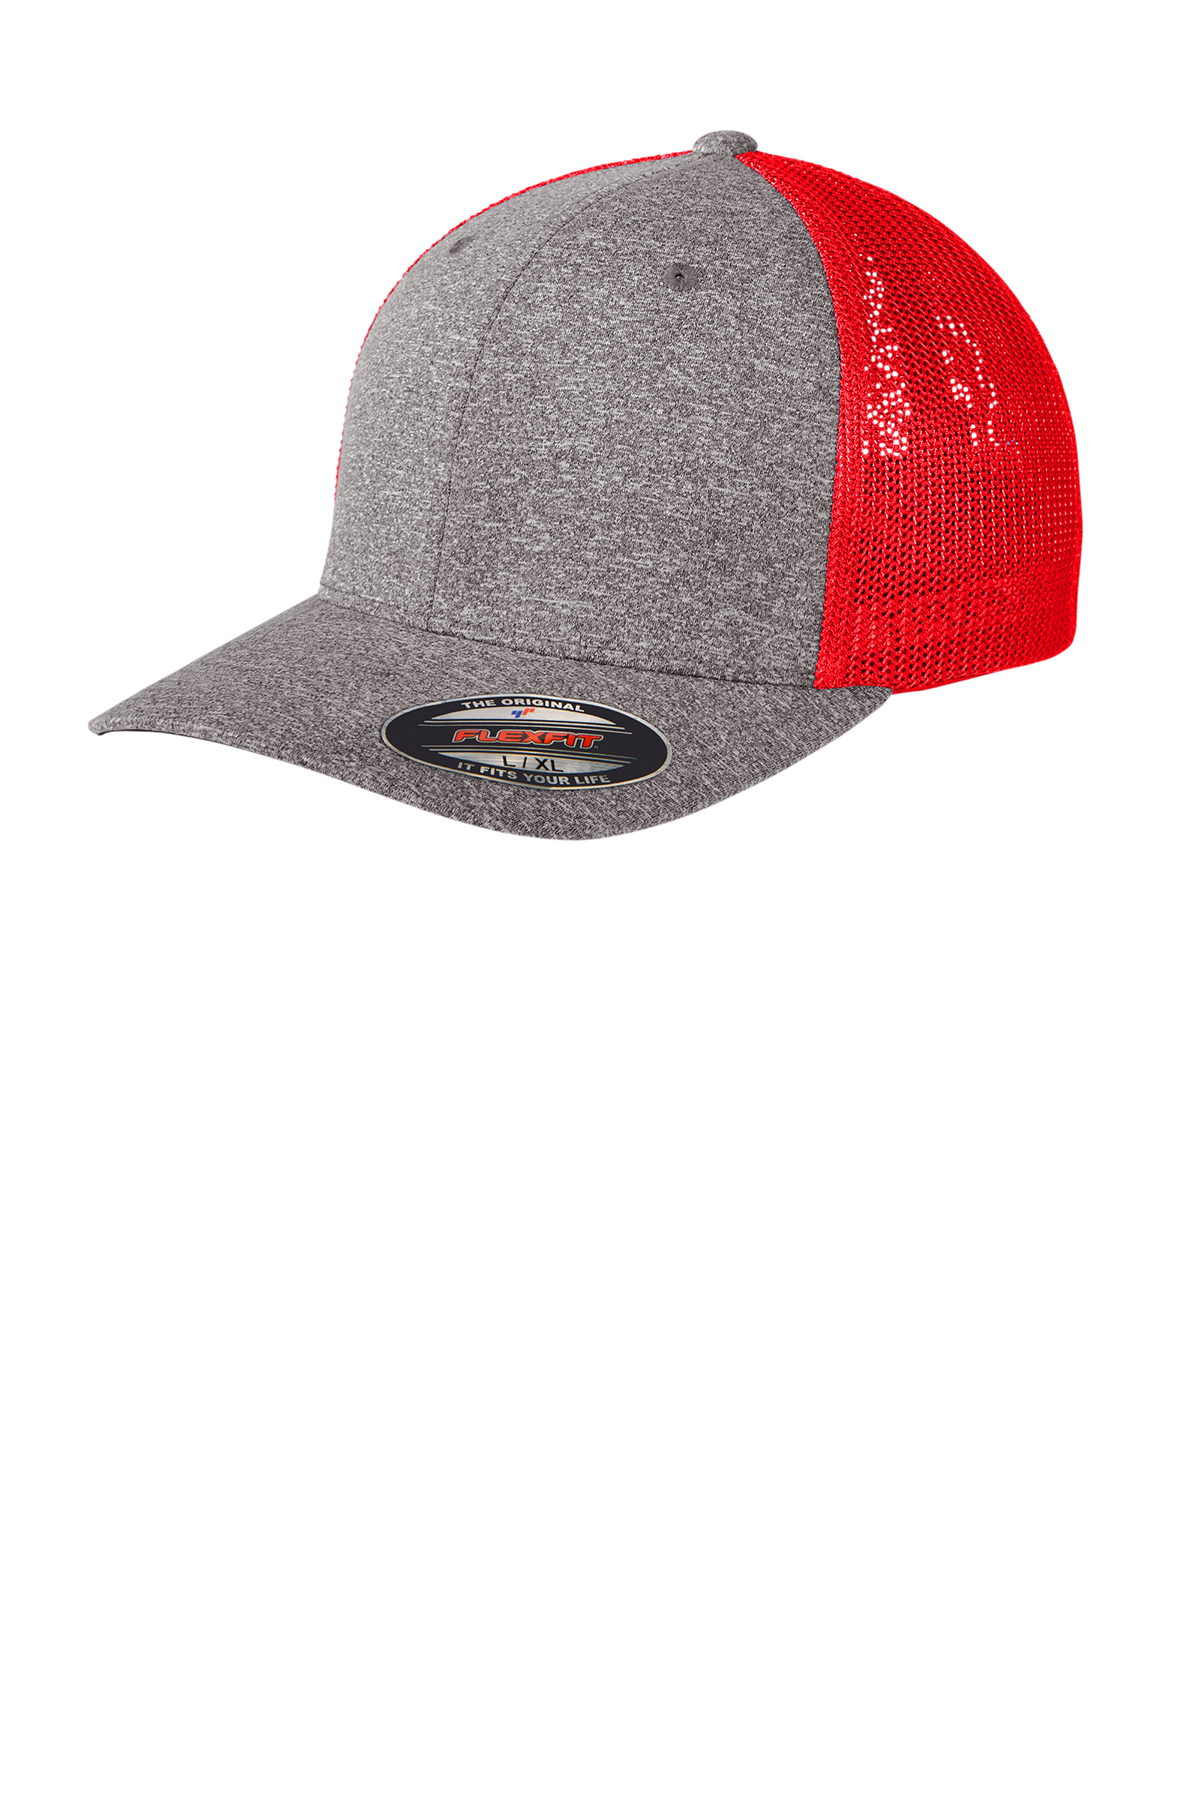 Port Authority C302 - Flexfit Melange Mesh Back Trucker Cap $9.01 - Headwear